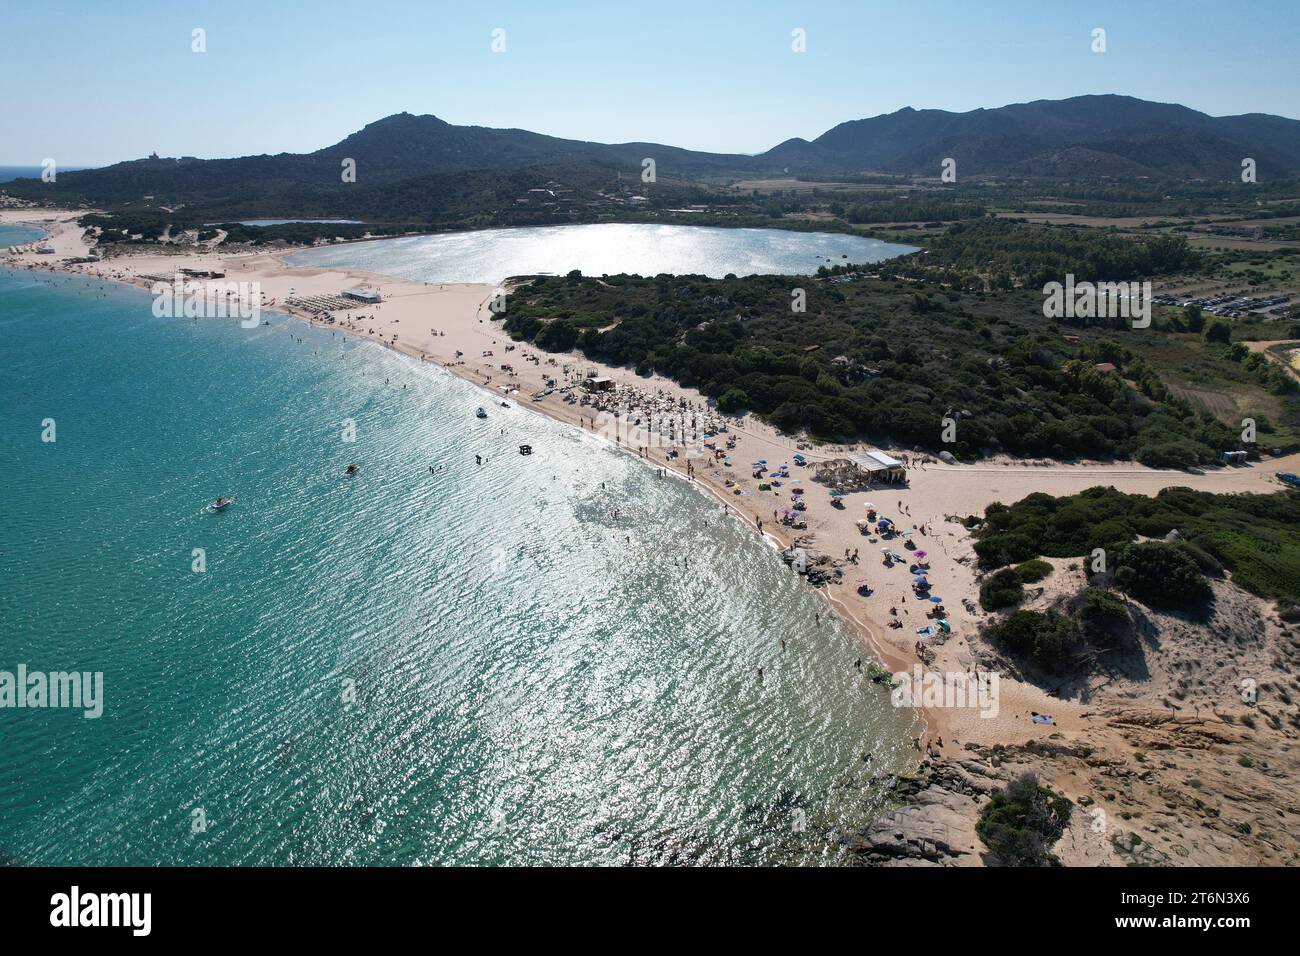 Su Giudeu Beach, Sardinien, Italien. Drohnenansicht. Stockfoto